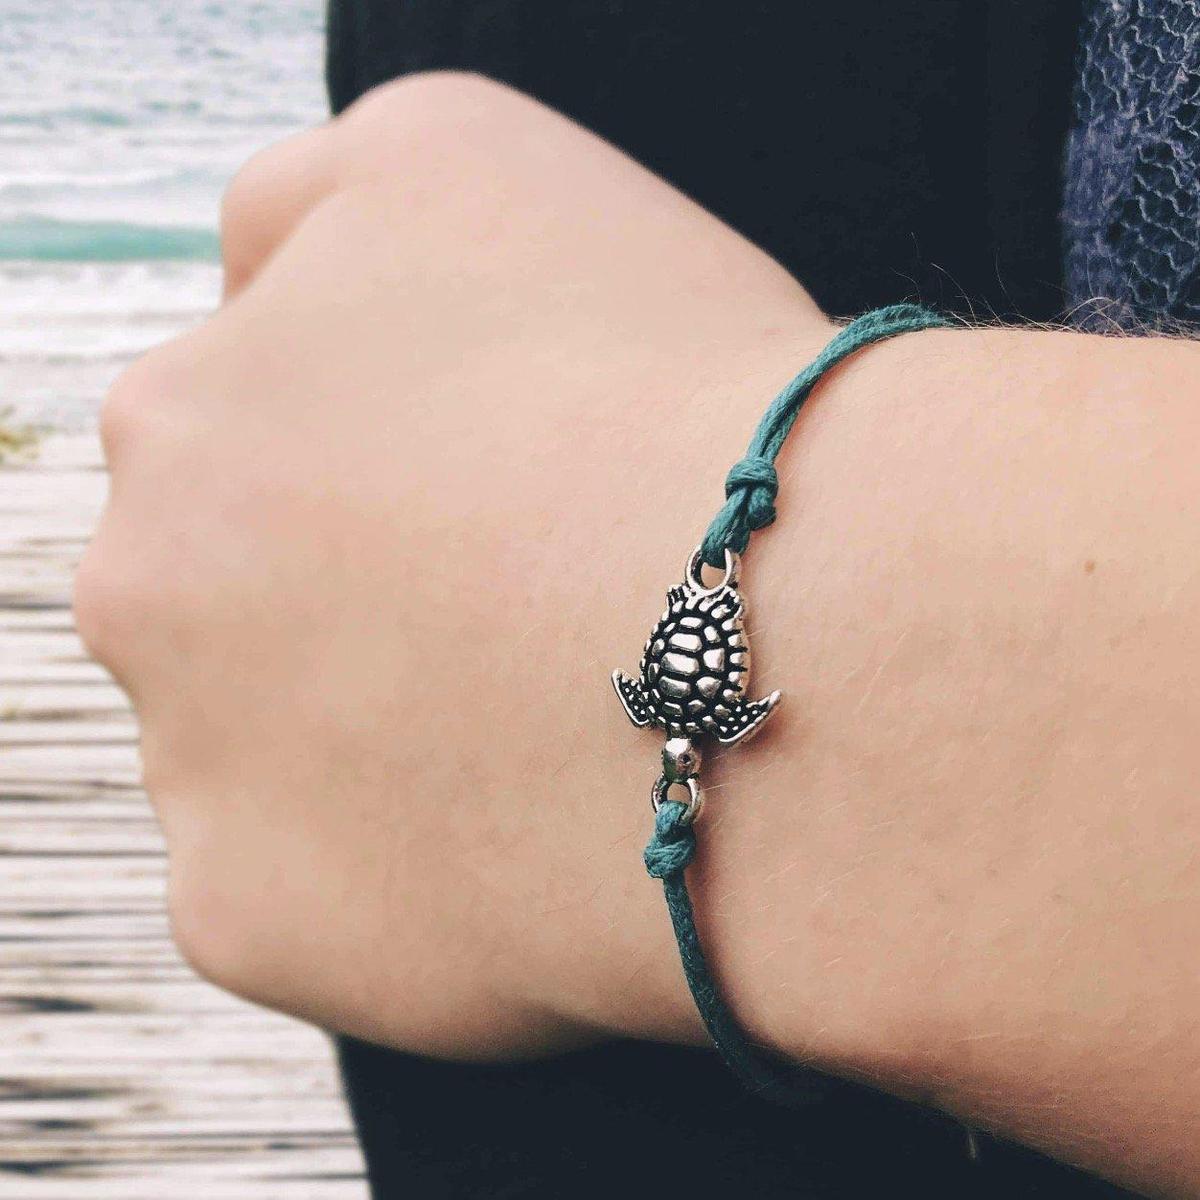 Turtle bracelet meaning